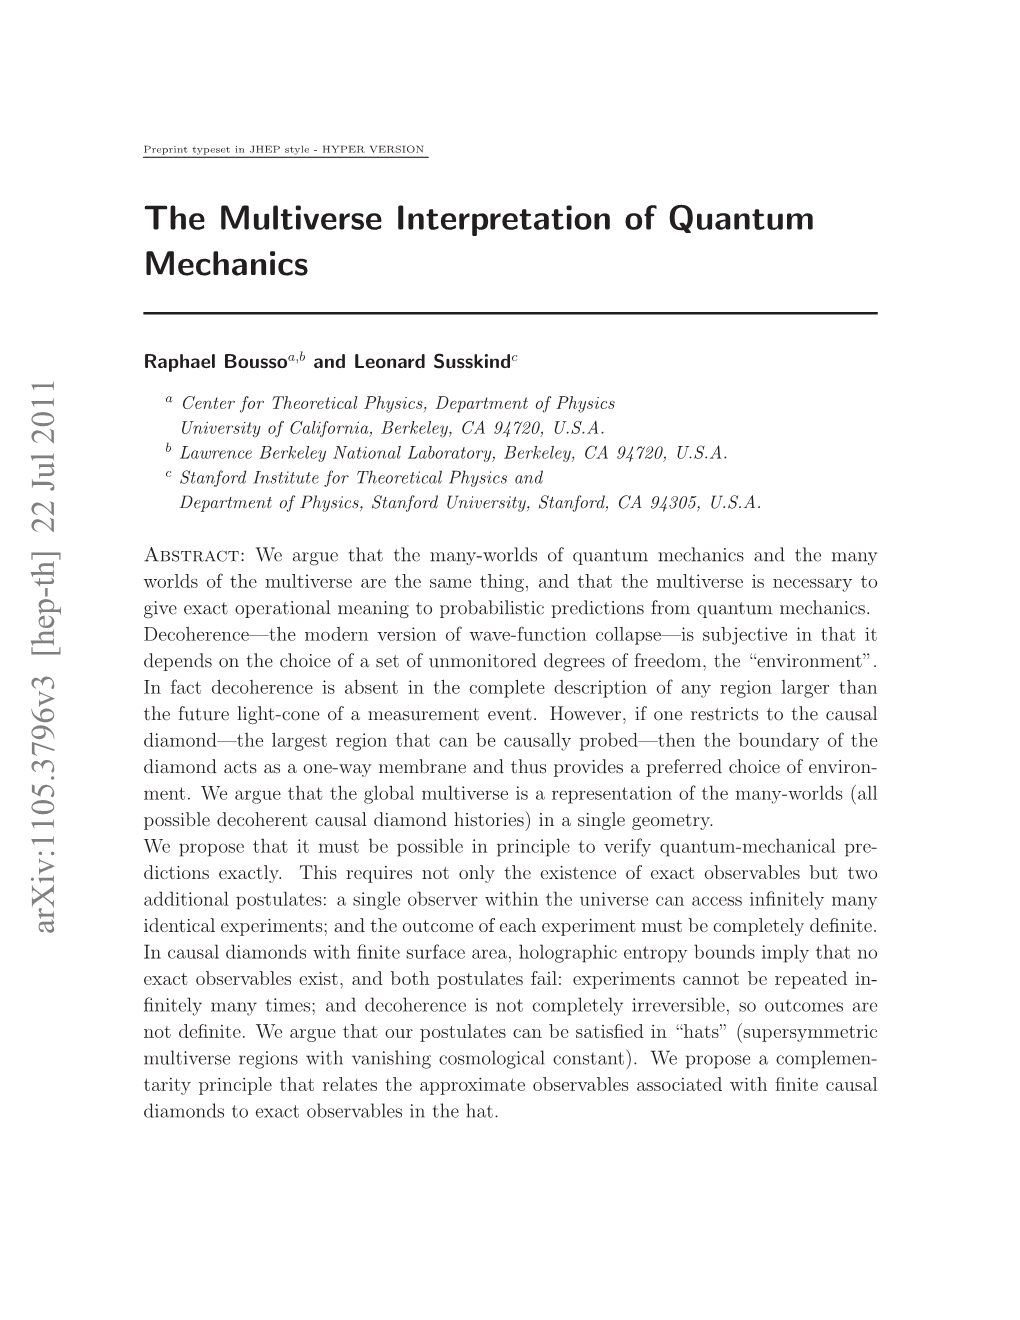 The Multiverse Interpretation of Quantum Mechanics Arxiv